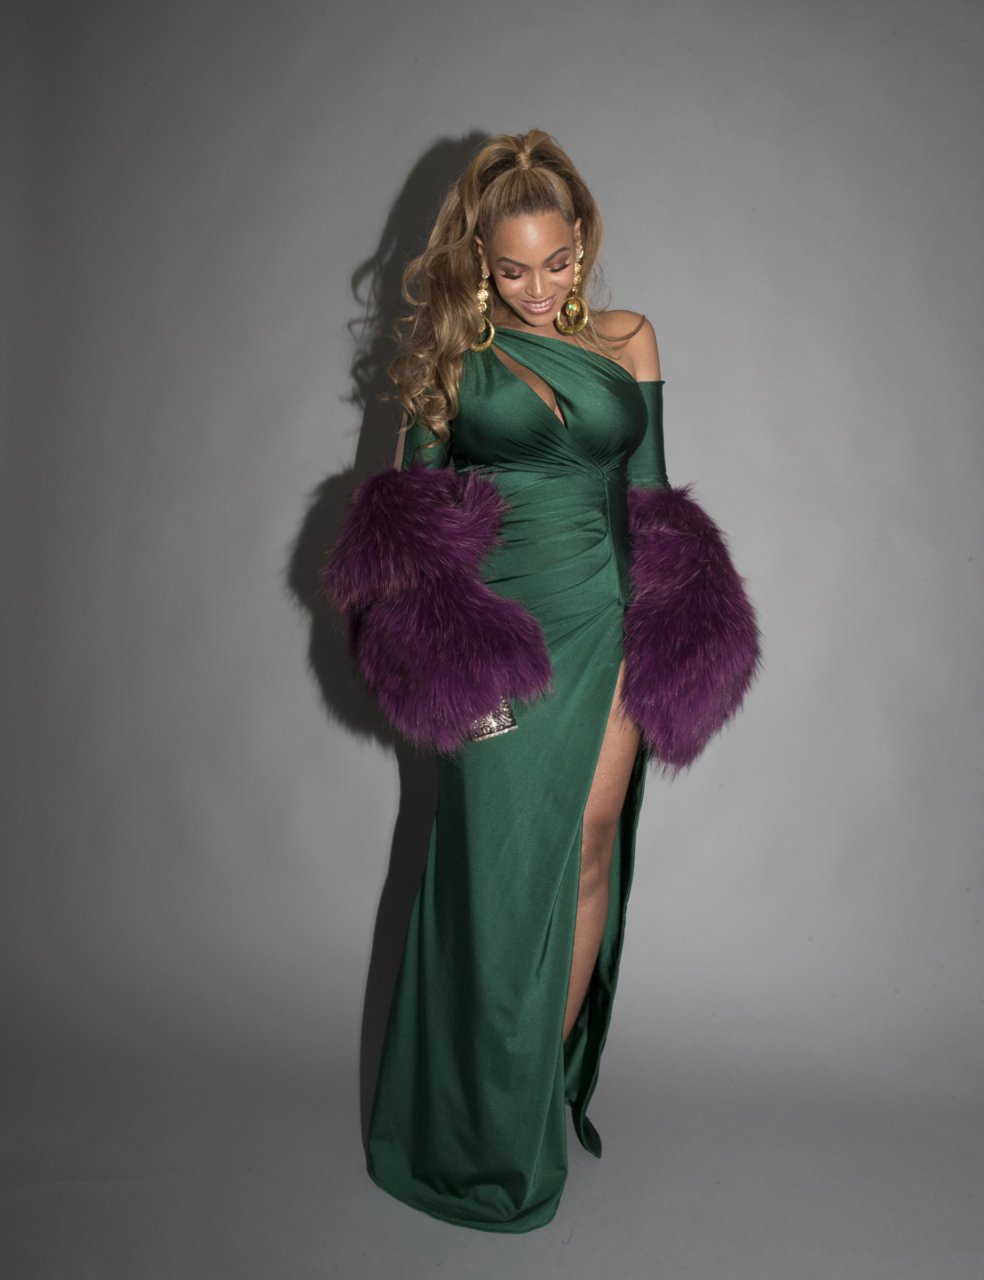 Beyonce Sexy (13 New Photos)